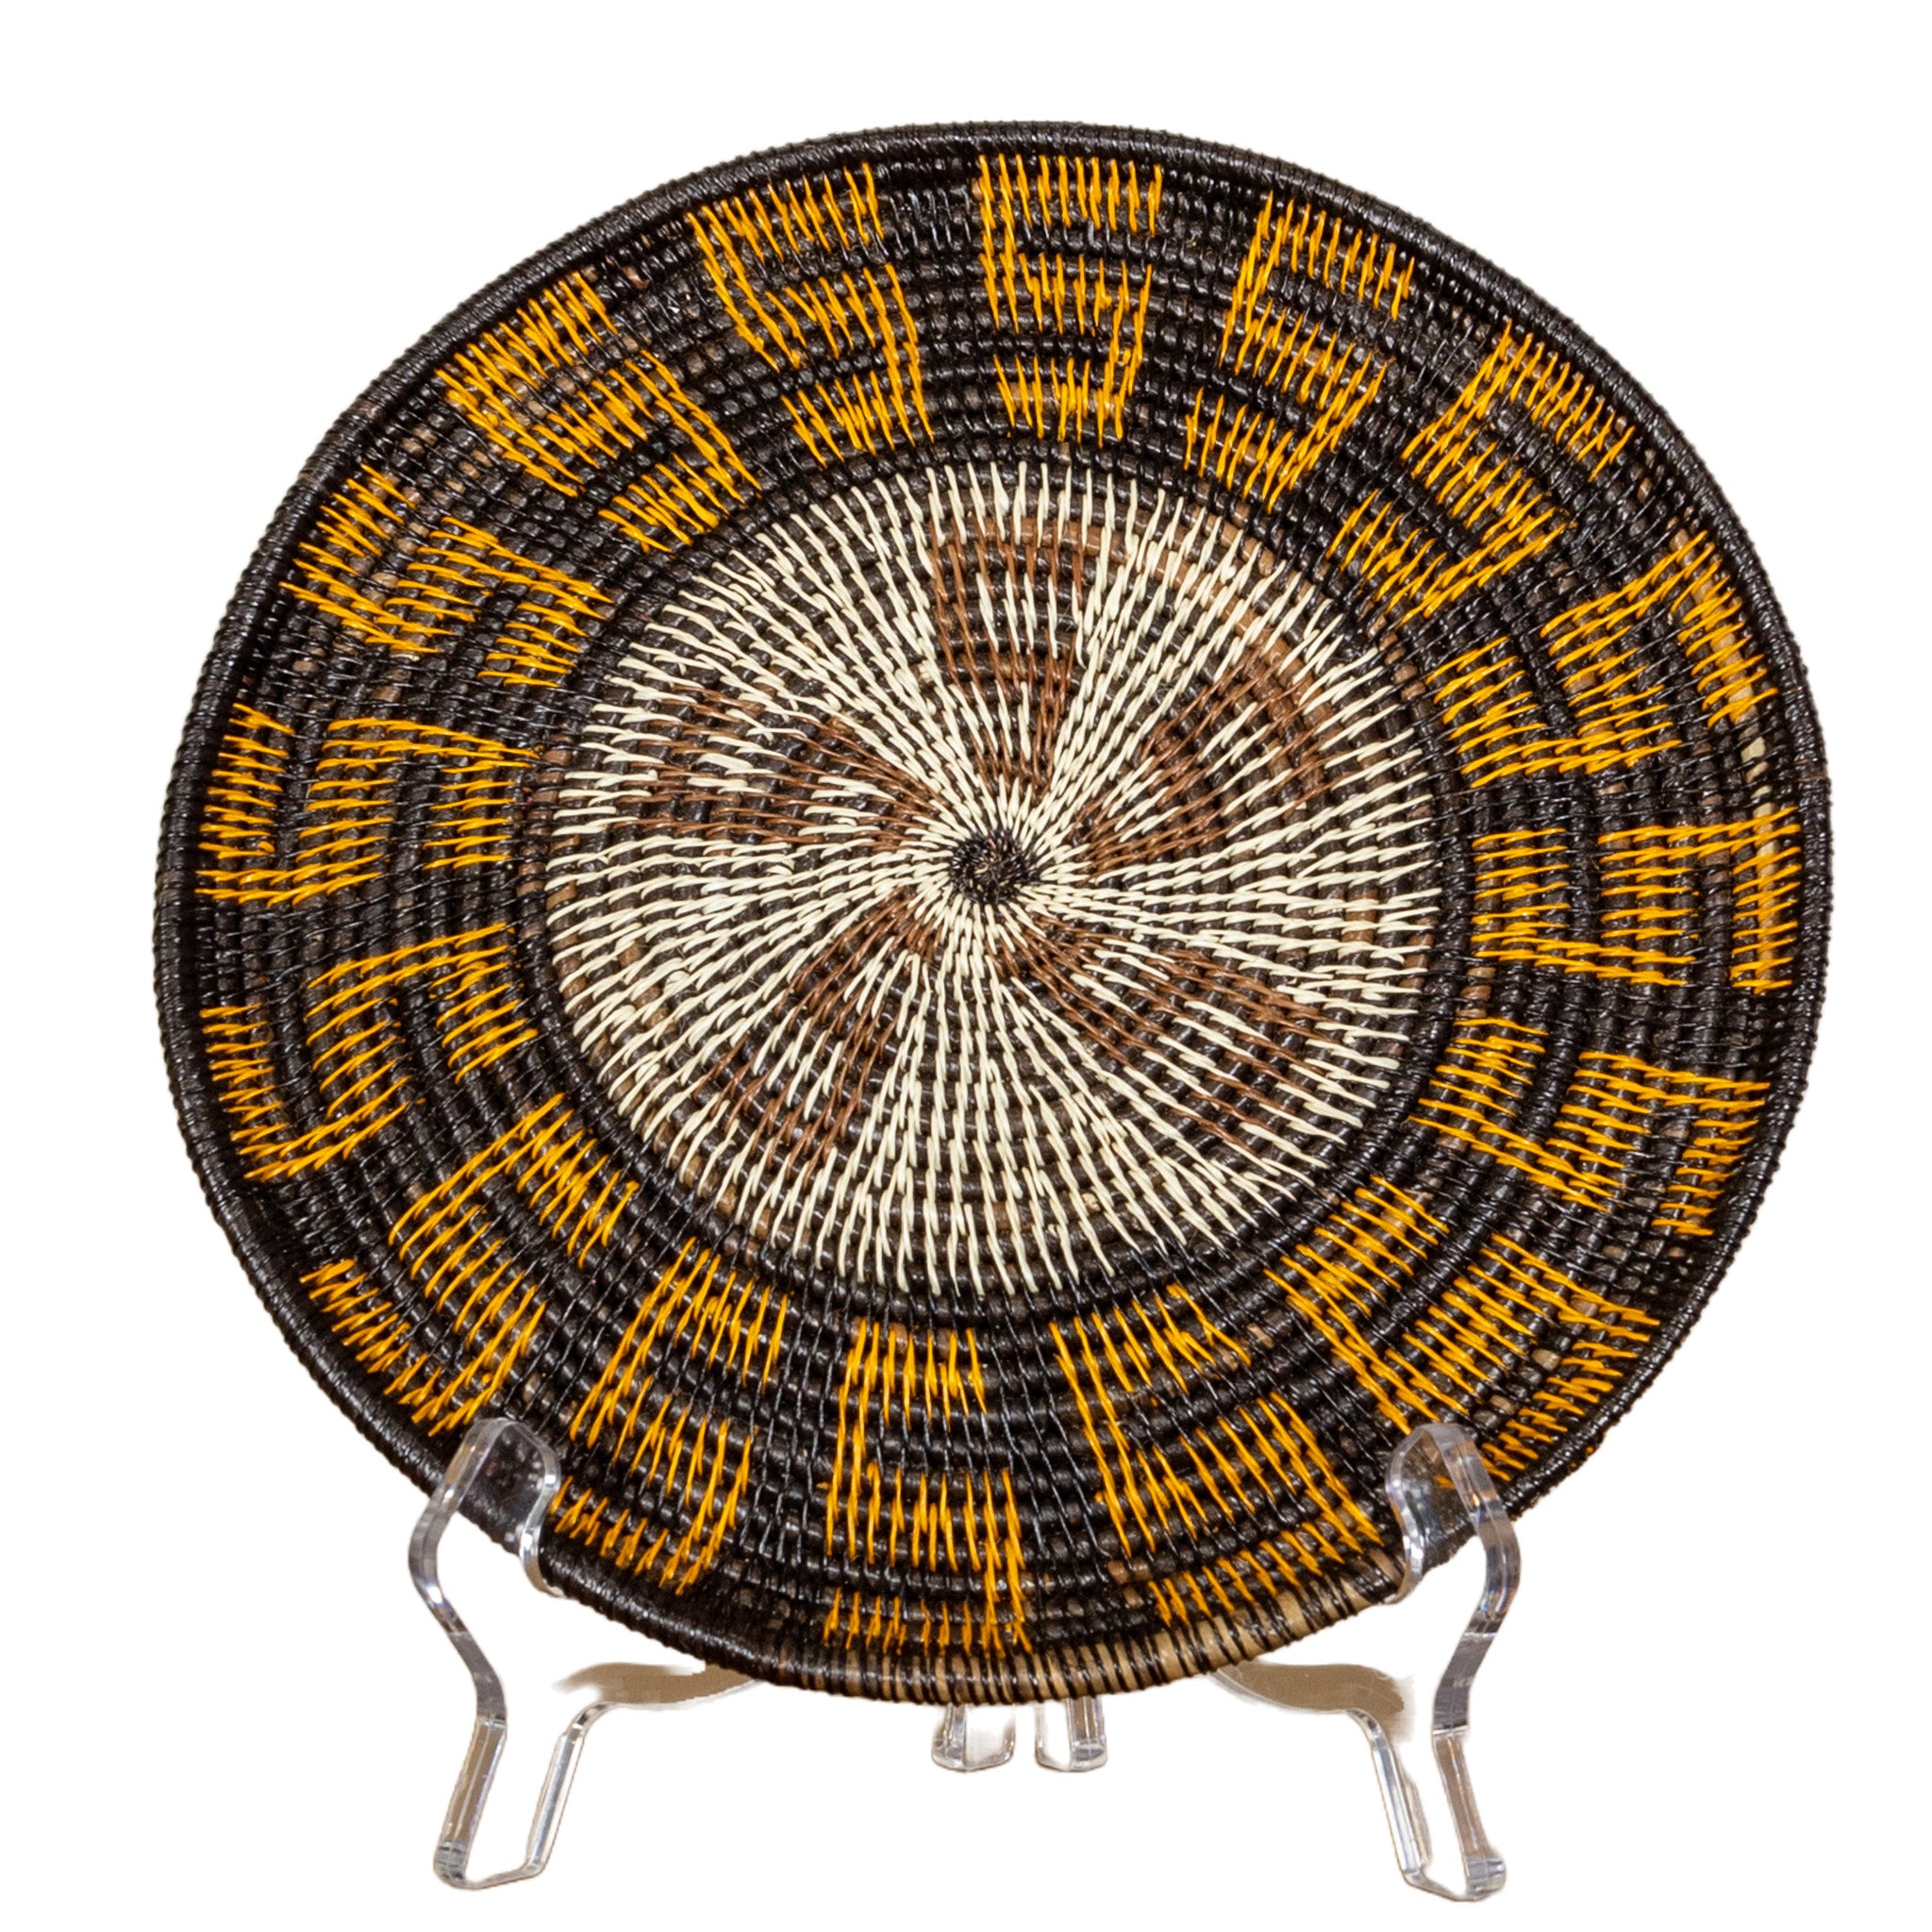 Black Gold And White Greek Key Basket Plate